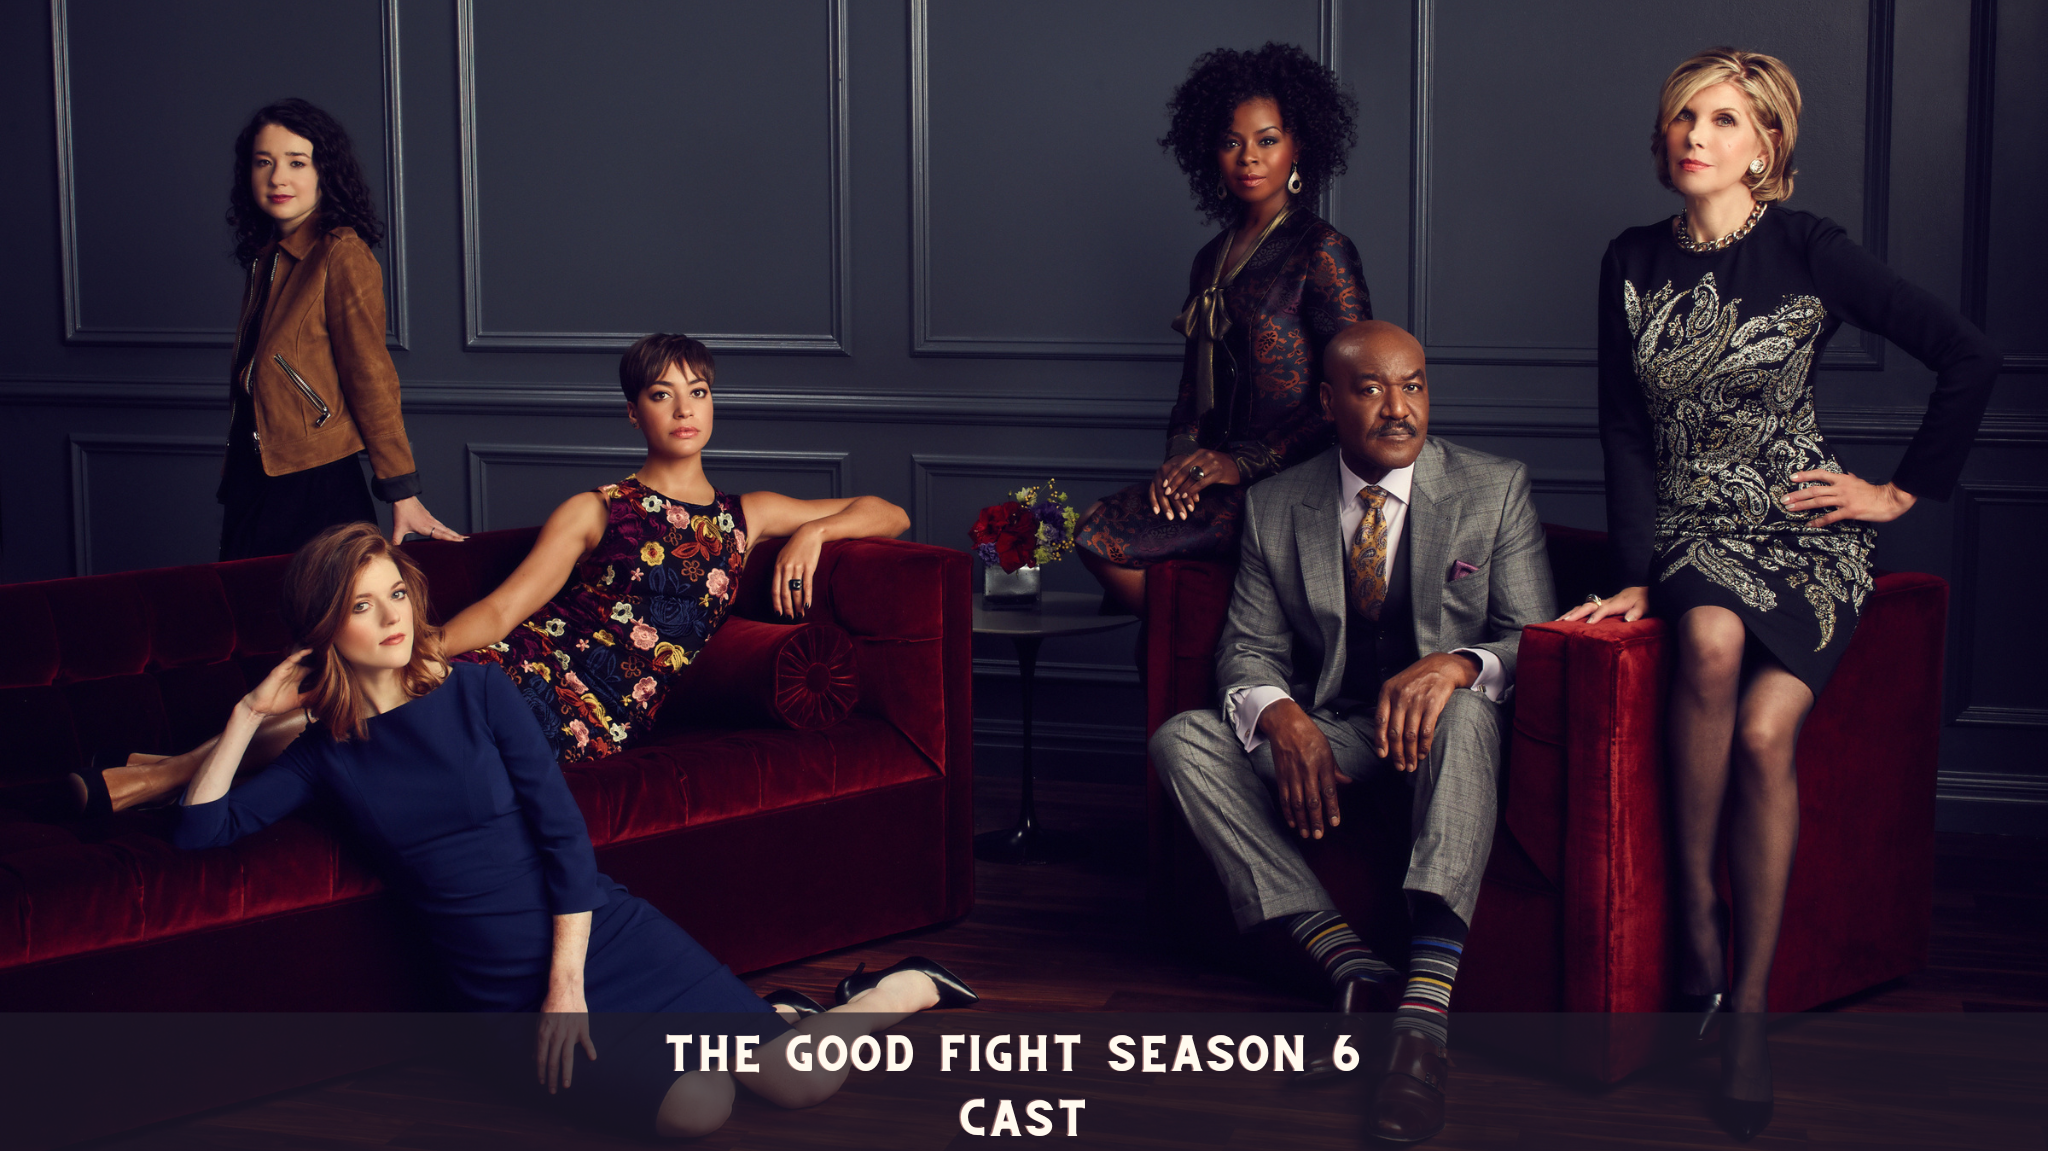 The Good Fight Season 6 Cast